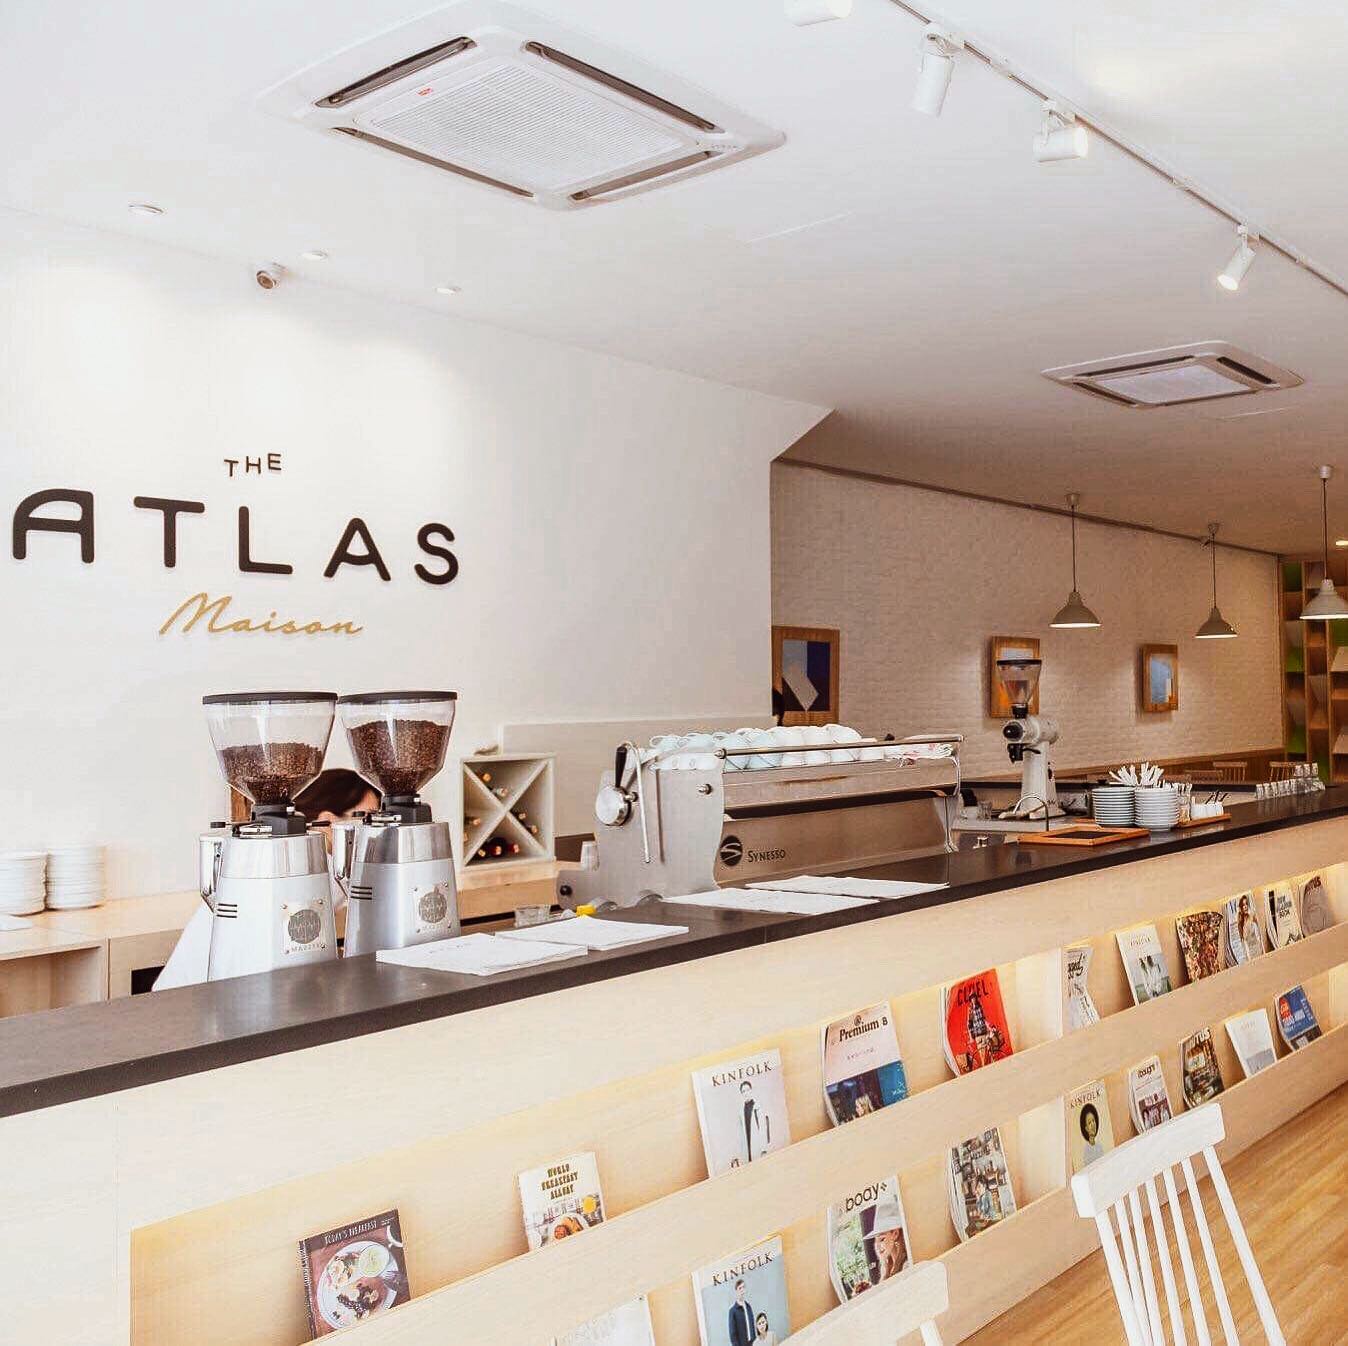 jb cafe guide - The Atlas Maison